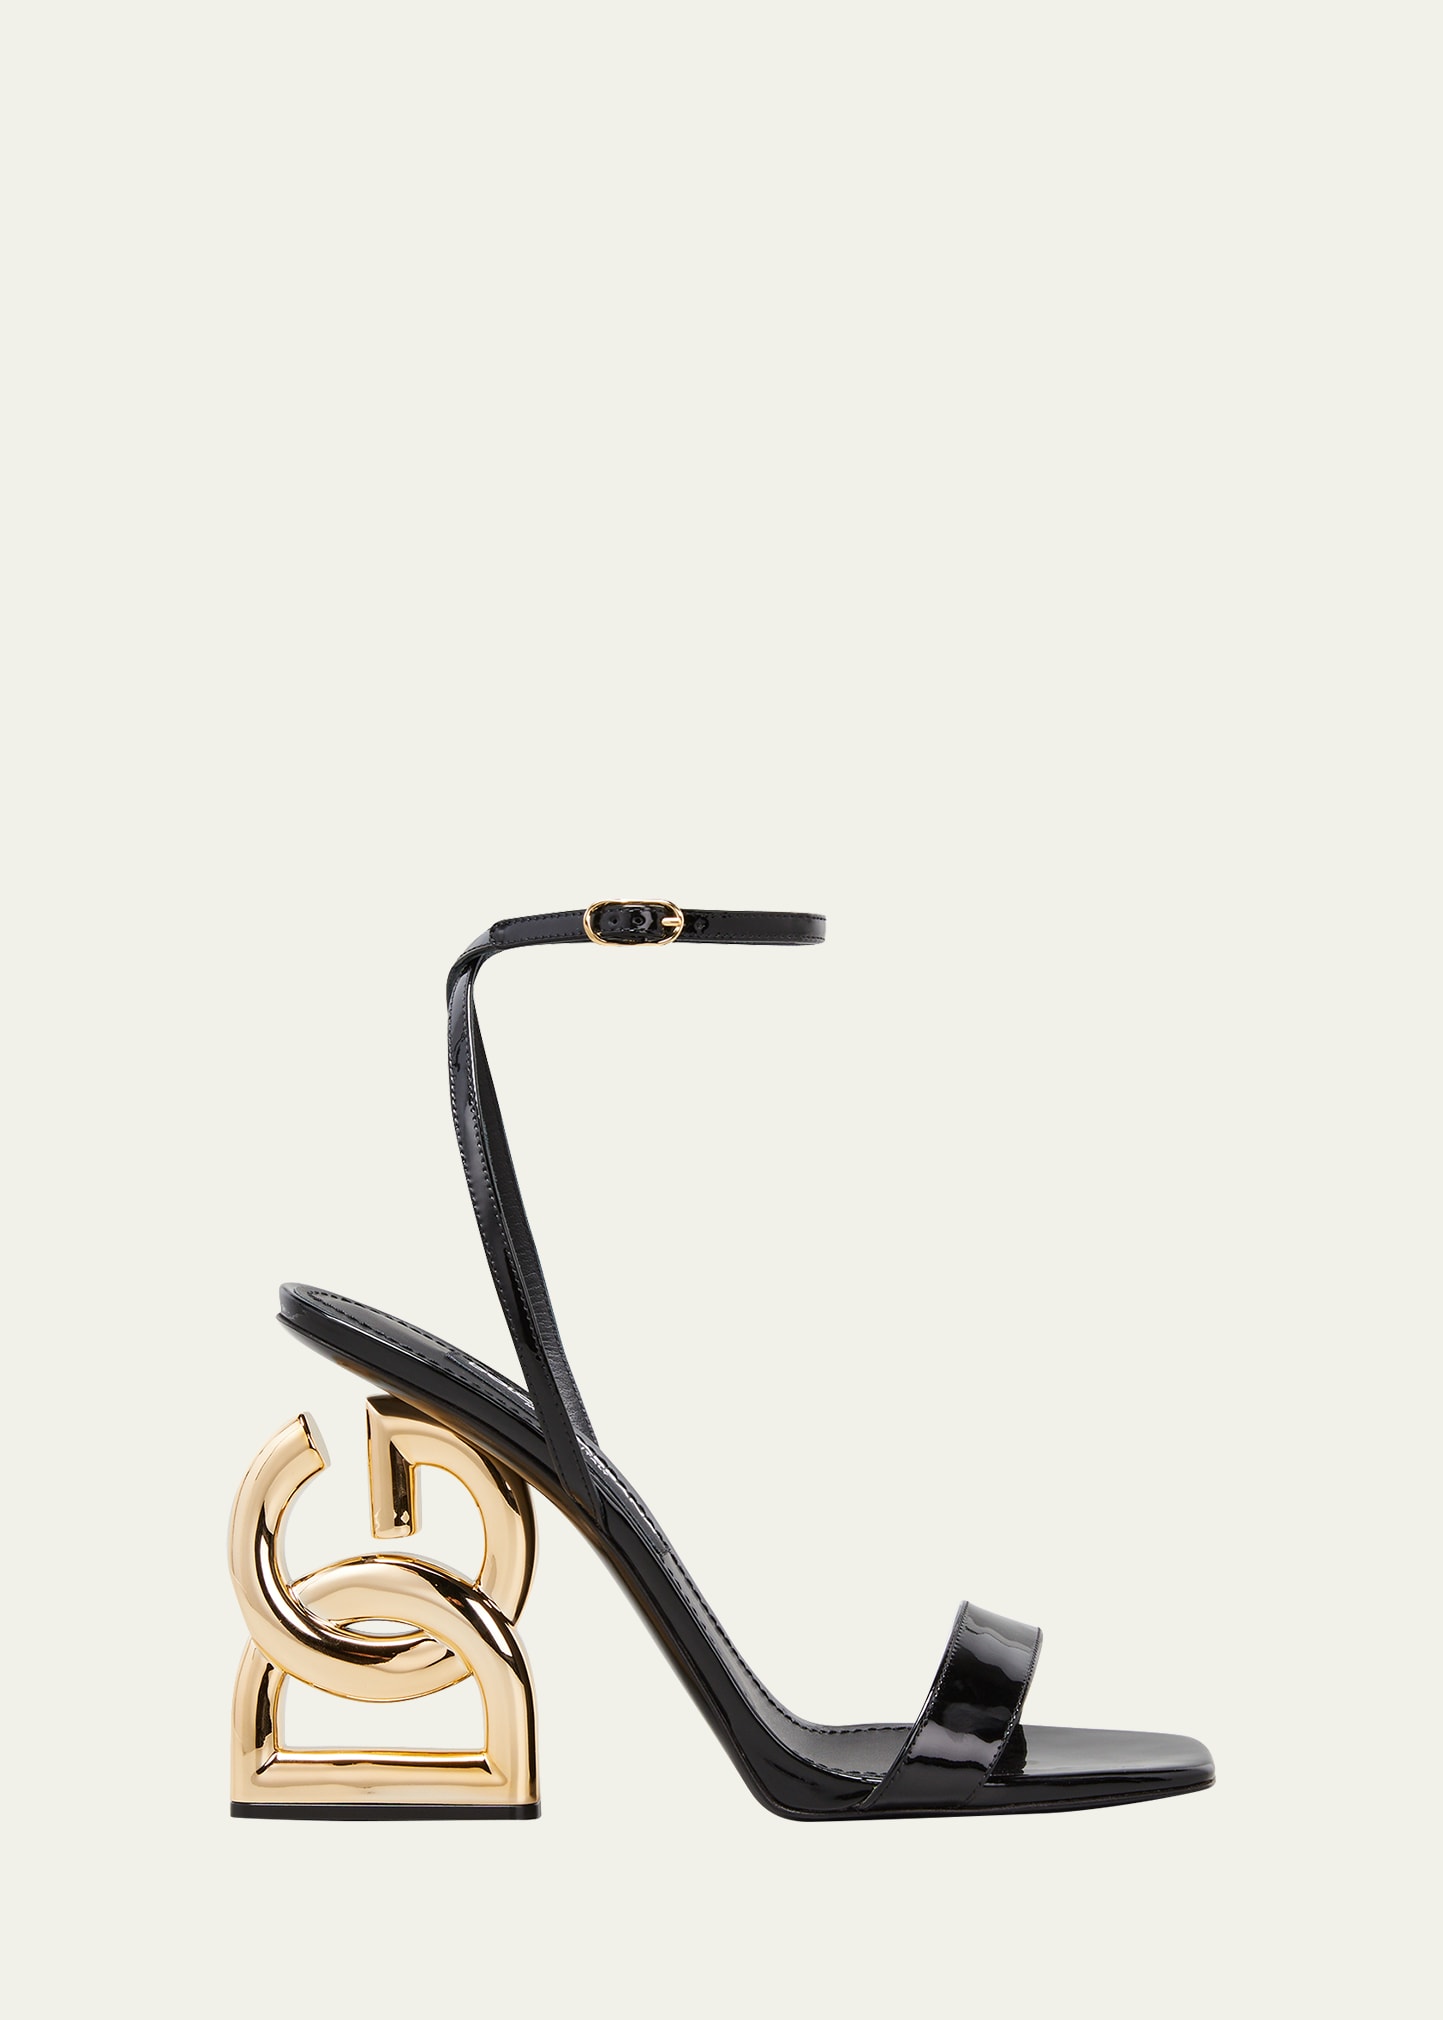 Dolce & Gabbana 105mm Patent Iconic DG Heel Sandals